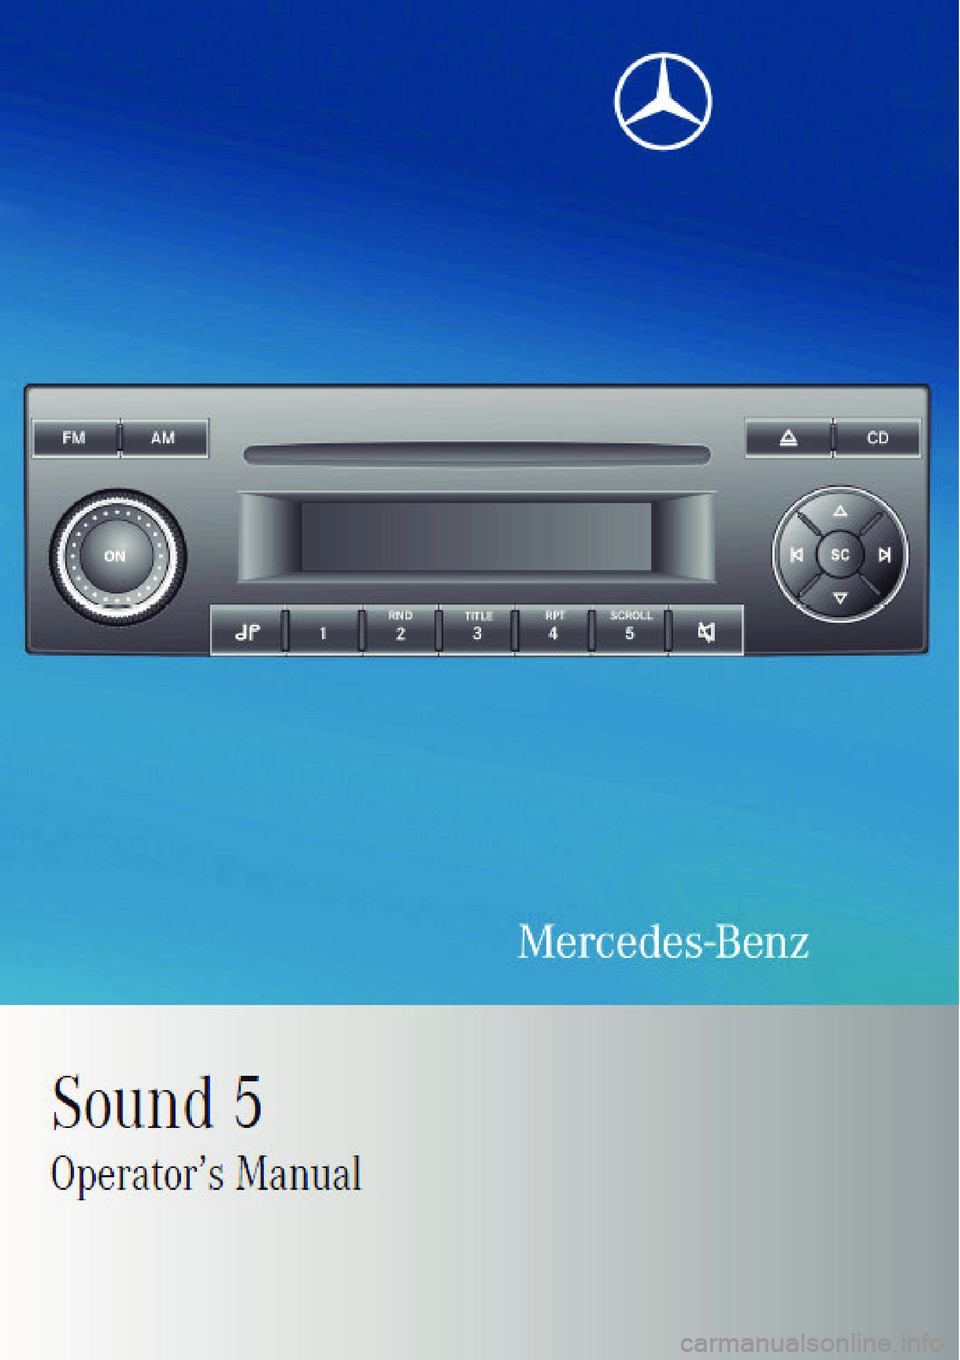 MERCEDES-BENZ SPRINTER 2012  MY 12 Audio Manual 